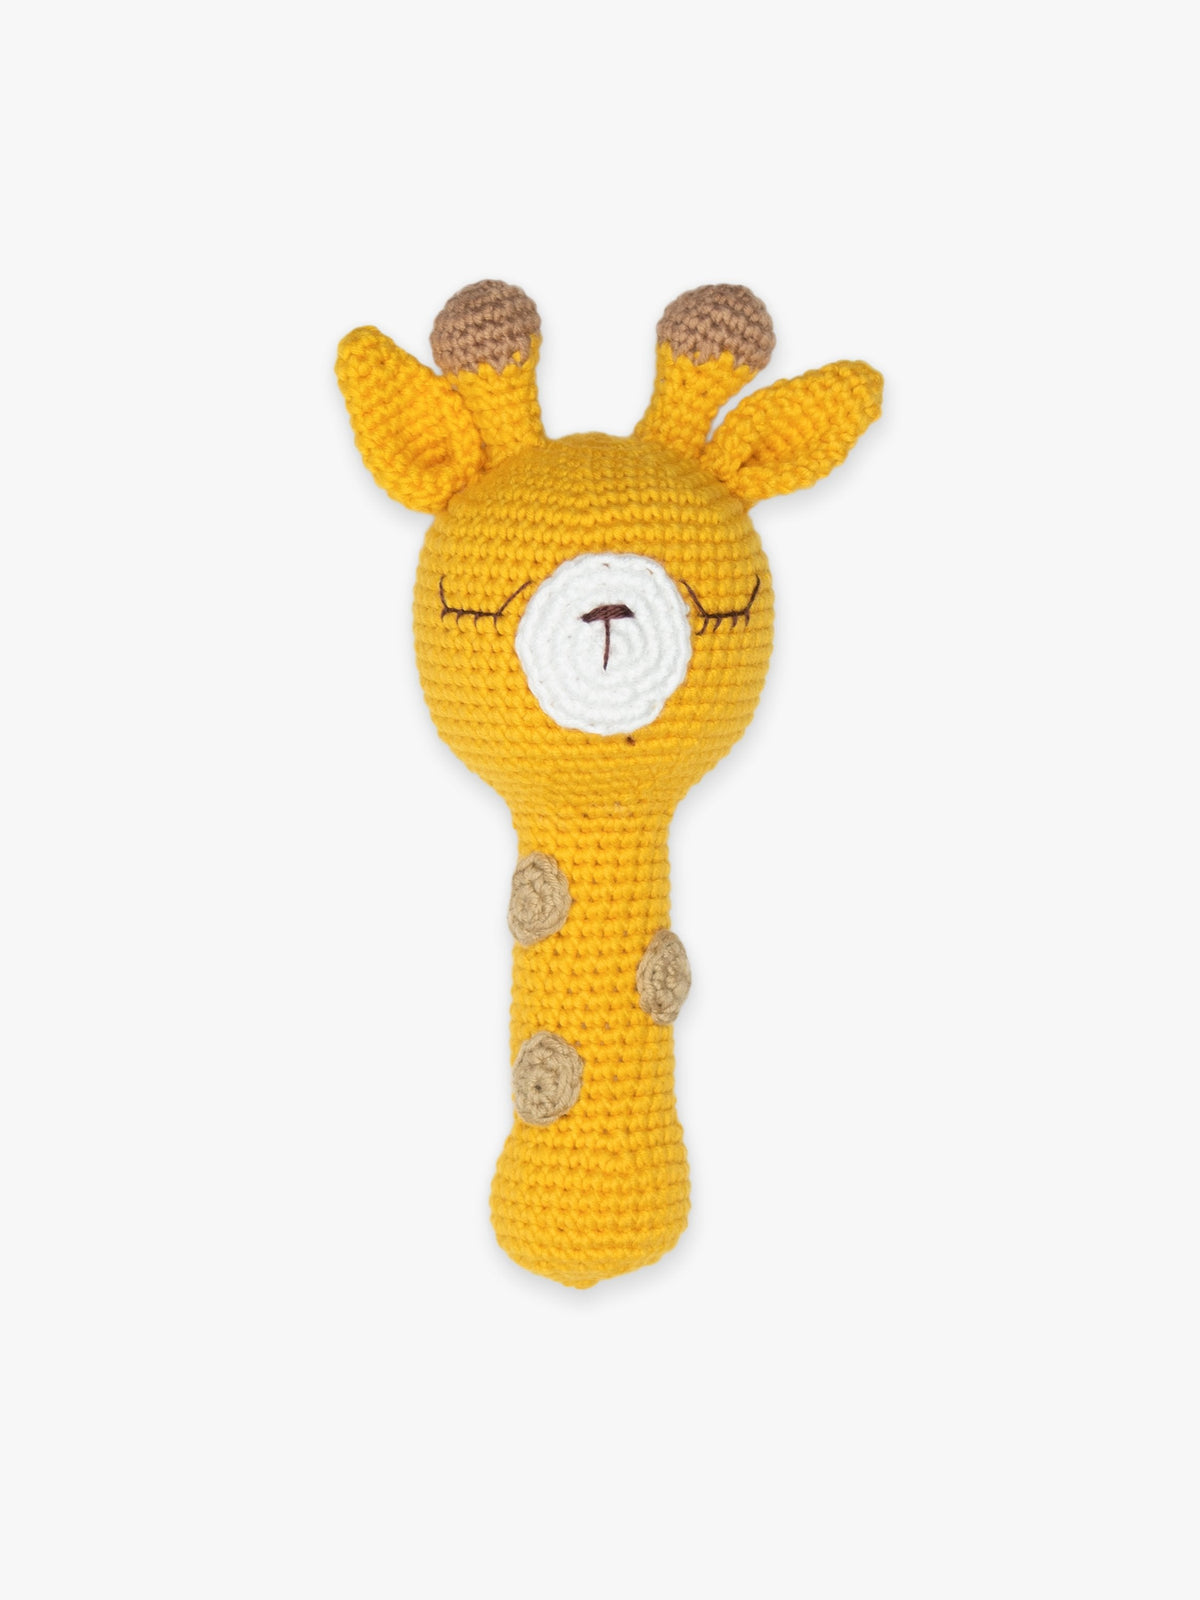 Crochet Rattle / Gigi the giraffe by Little Moy